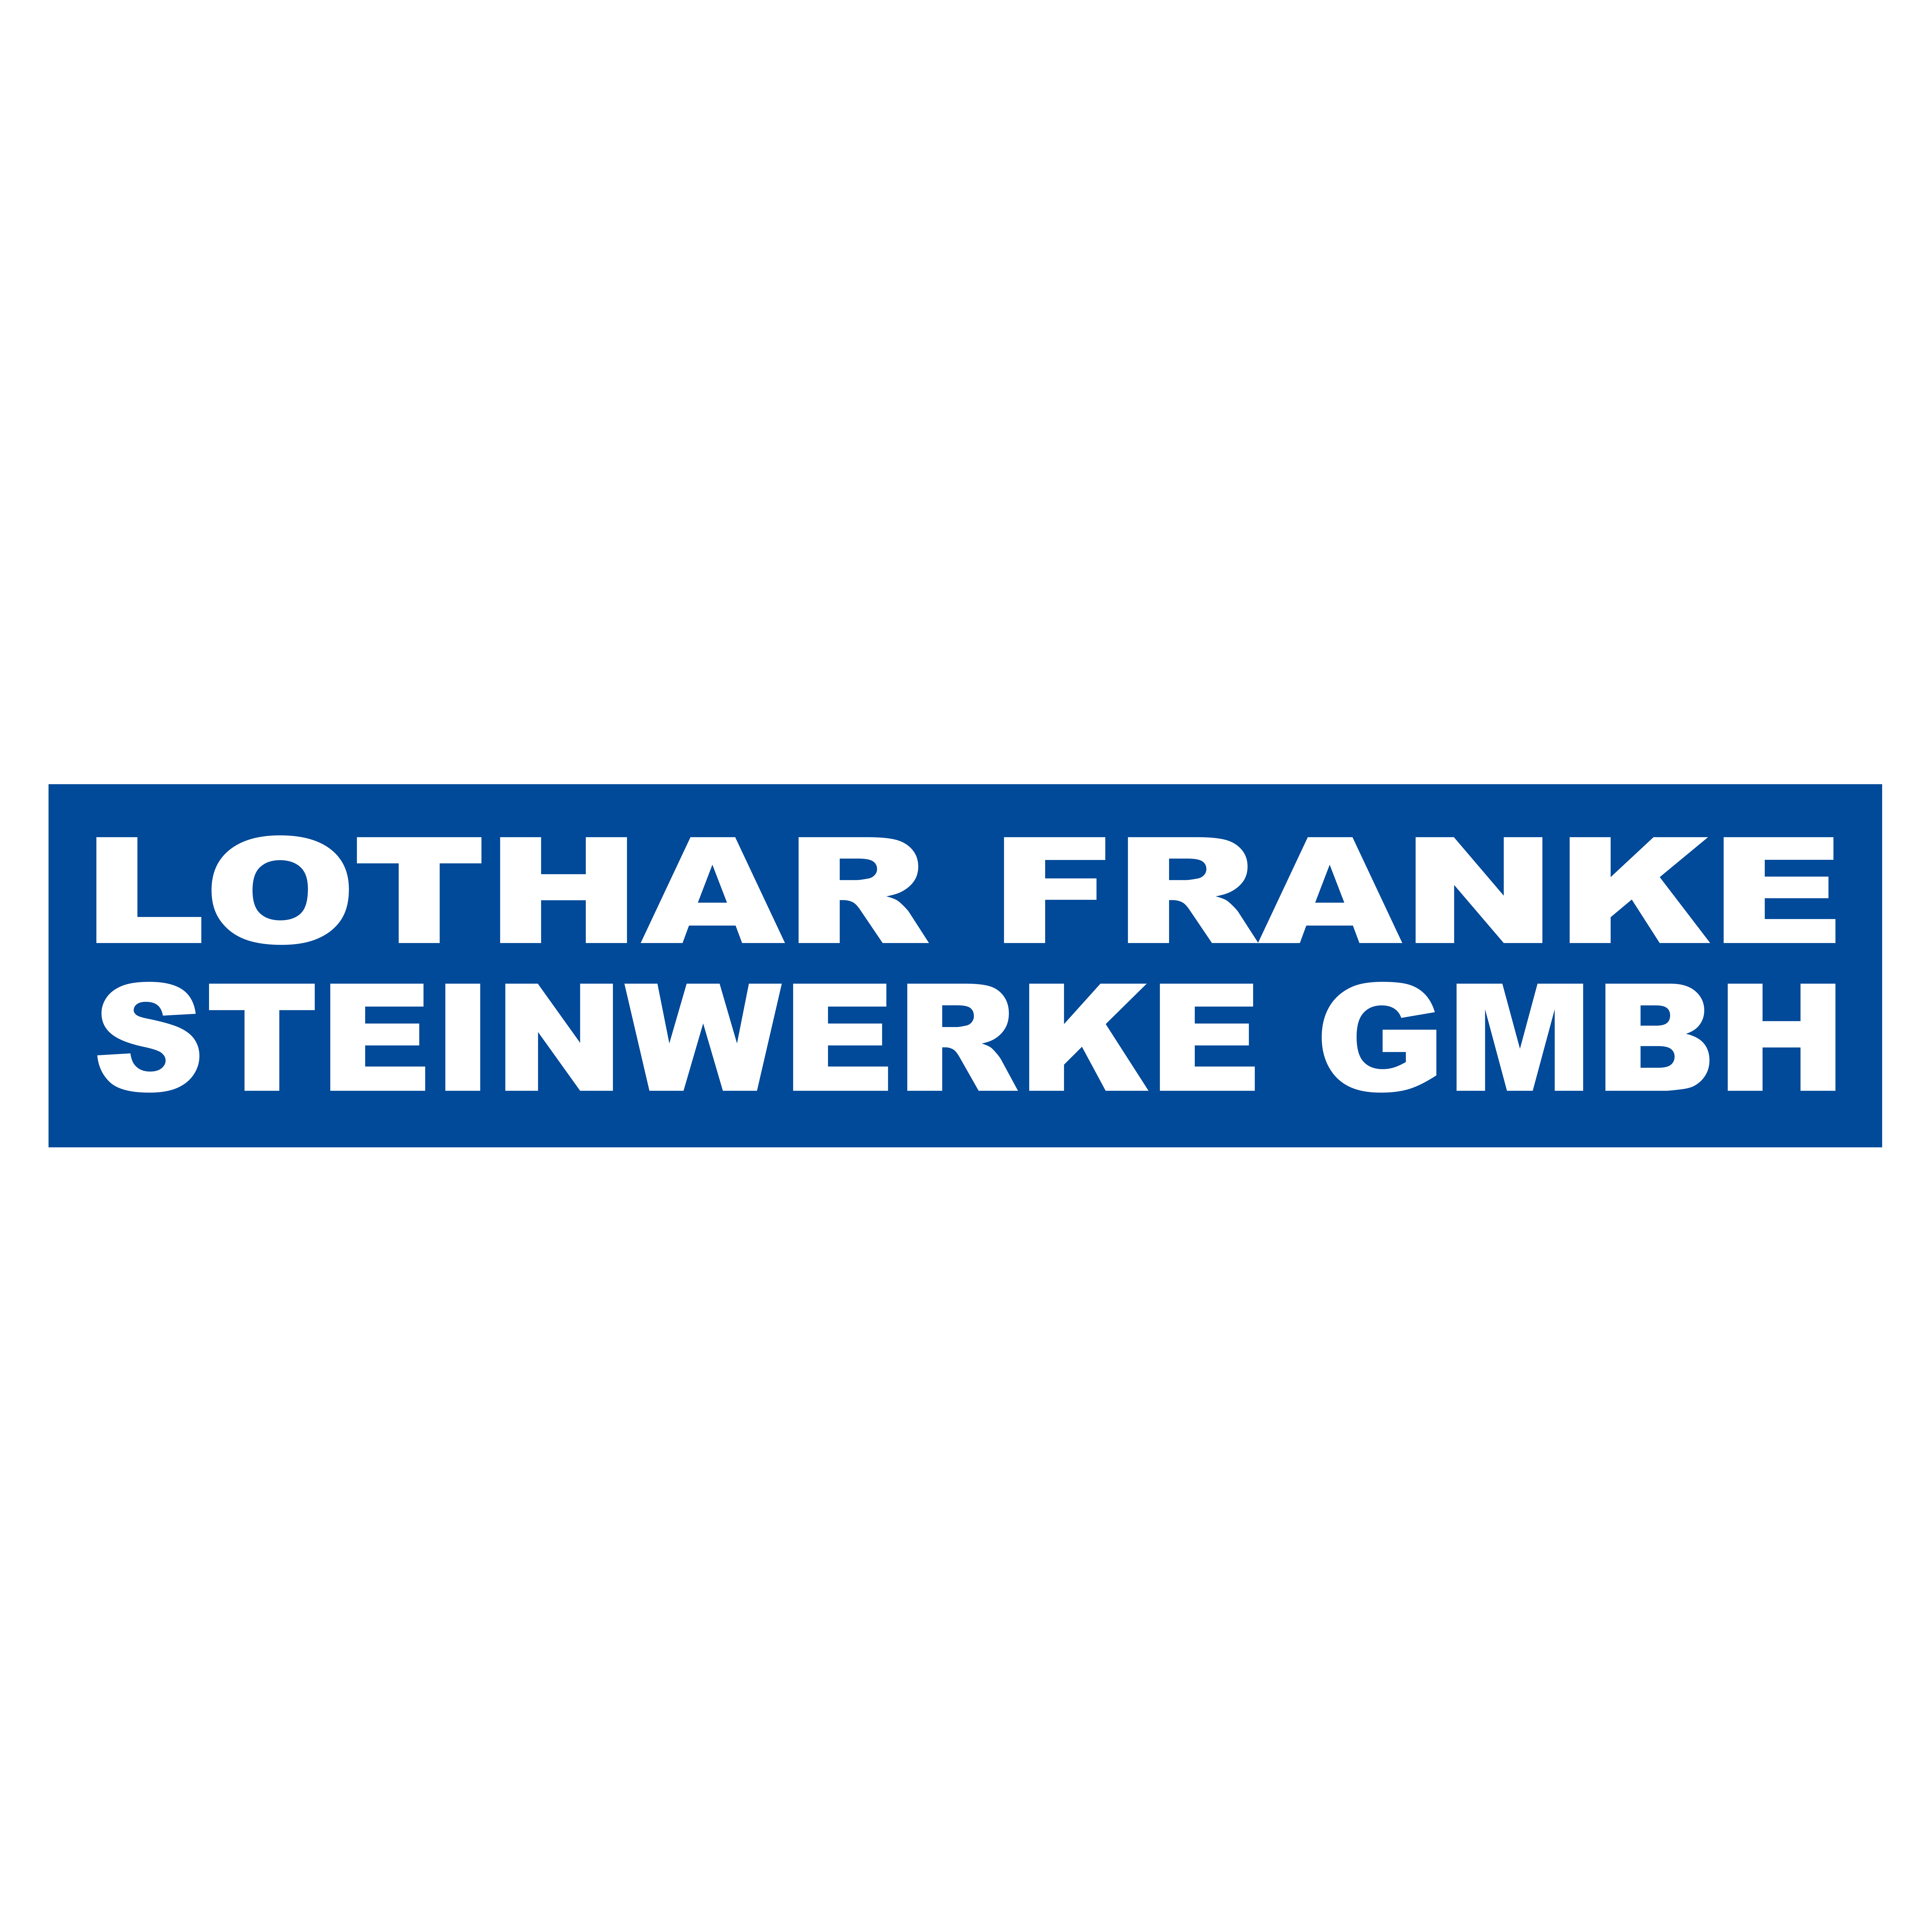 Lothar Franke Steinwerke GmbH